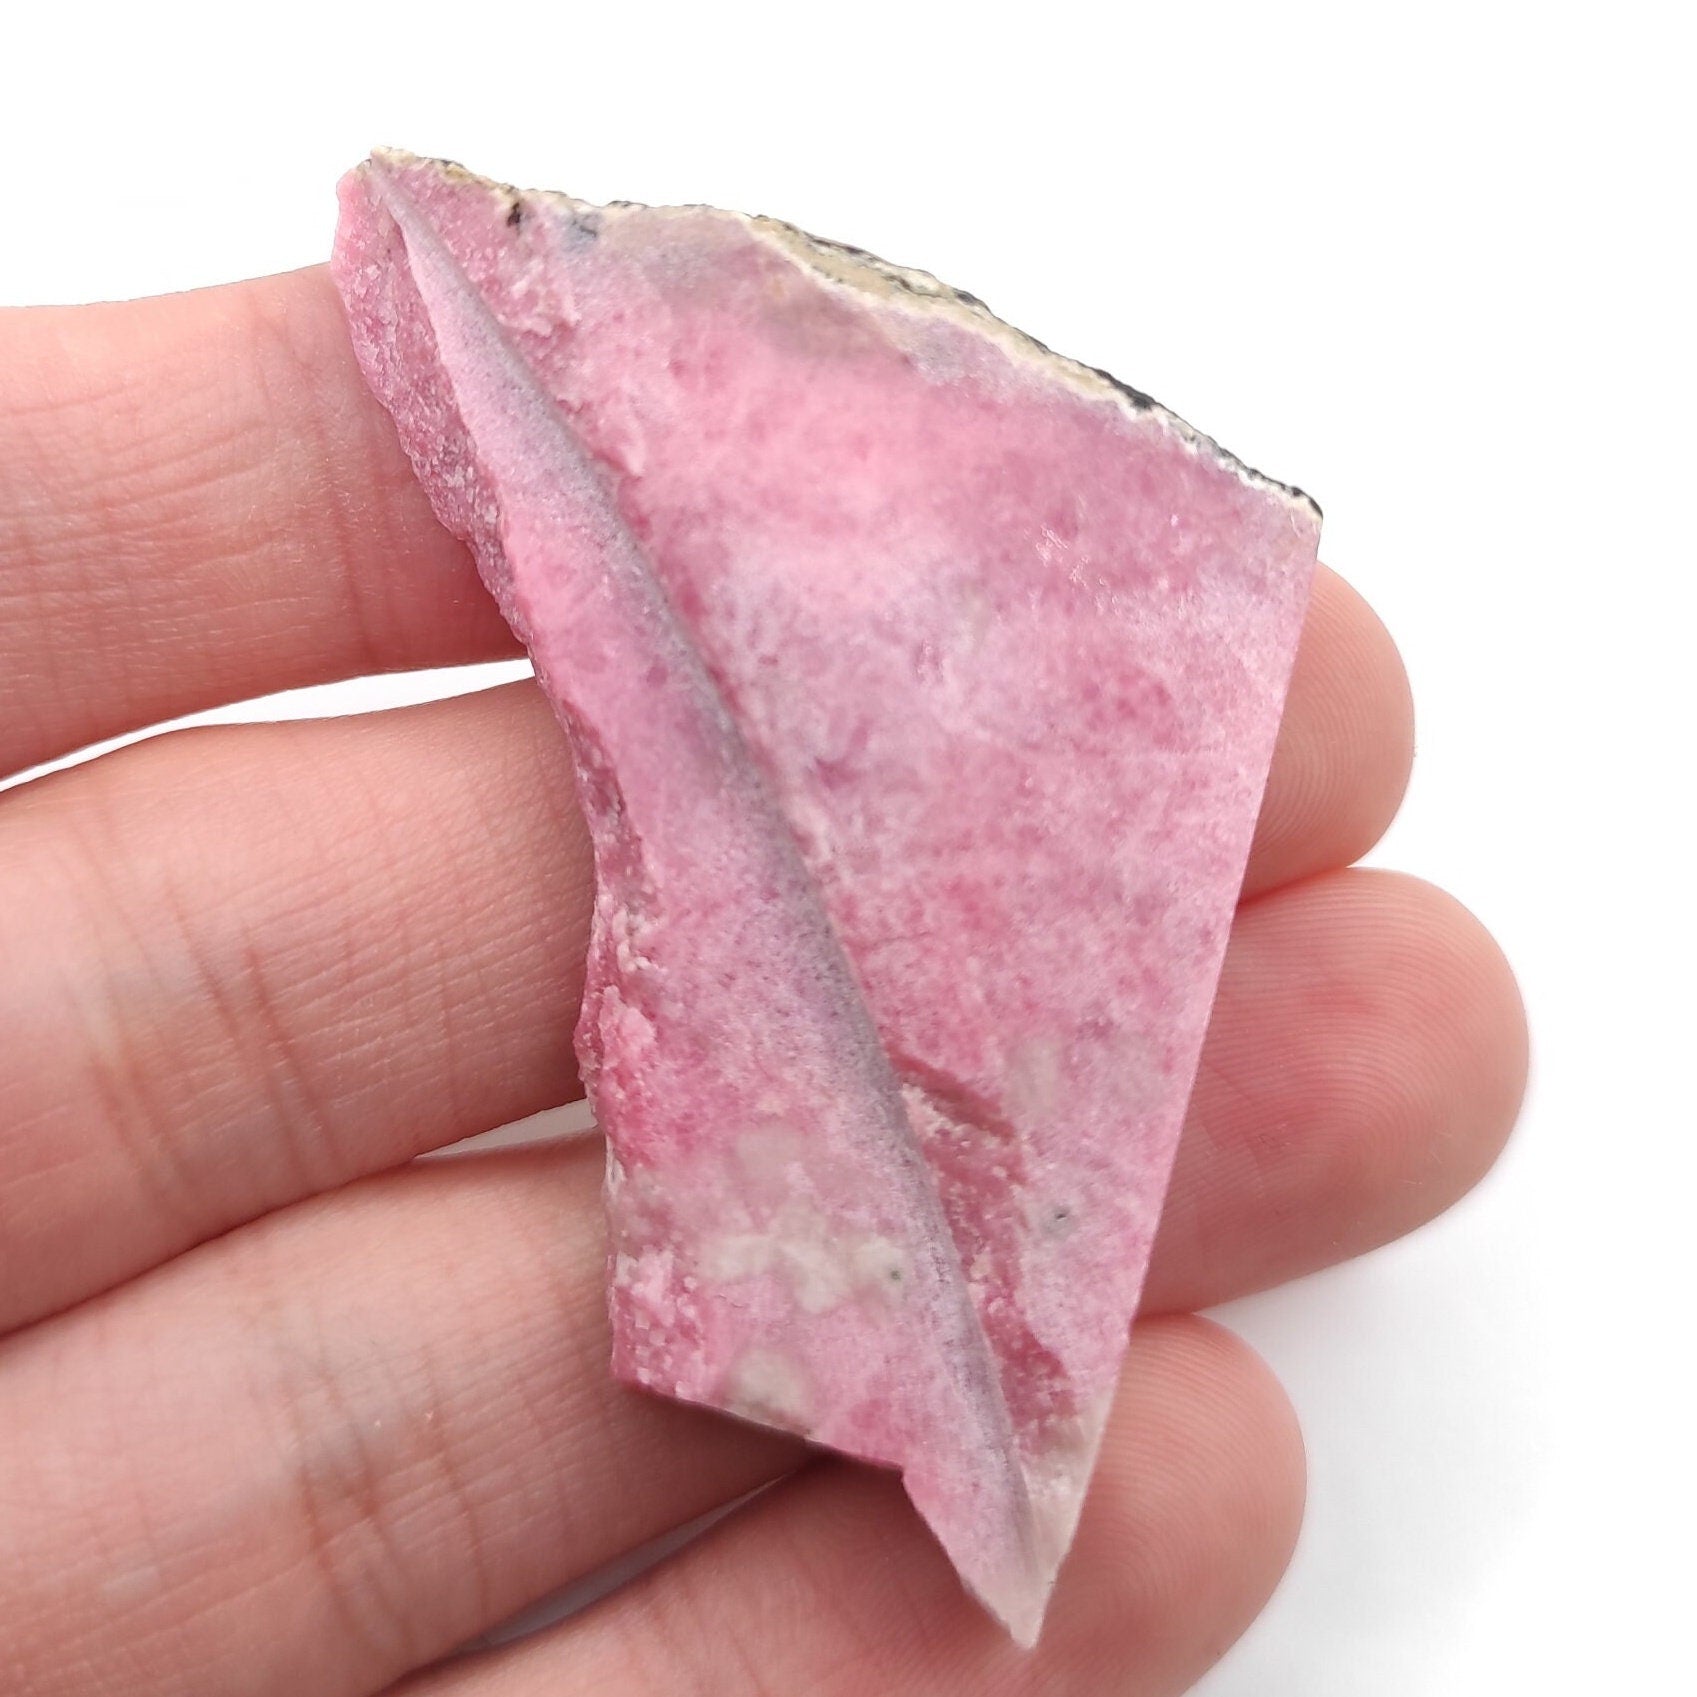 27.9g Rhodonite Slab from Yukon, Canada - Natural Pink Rhodonite Slab - Slabs for Cabbing - Rough Rhodonite from Evelyn Creek, Canada